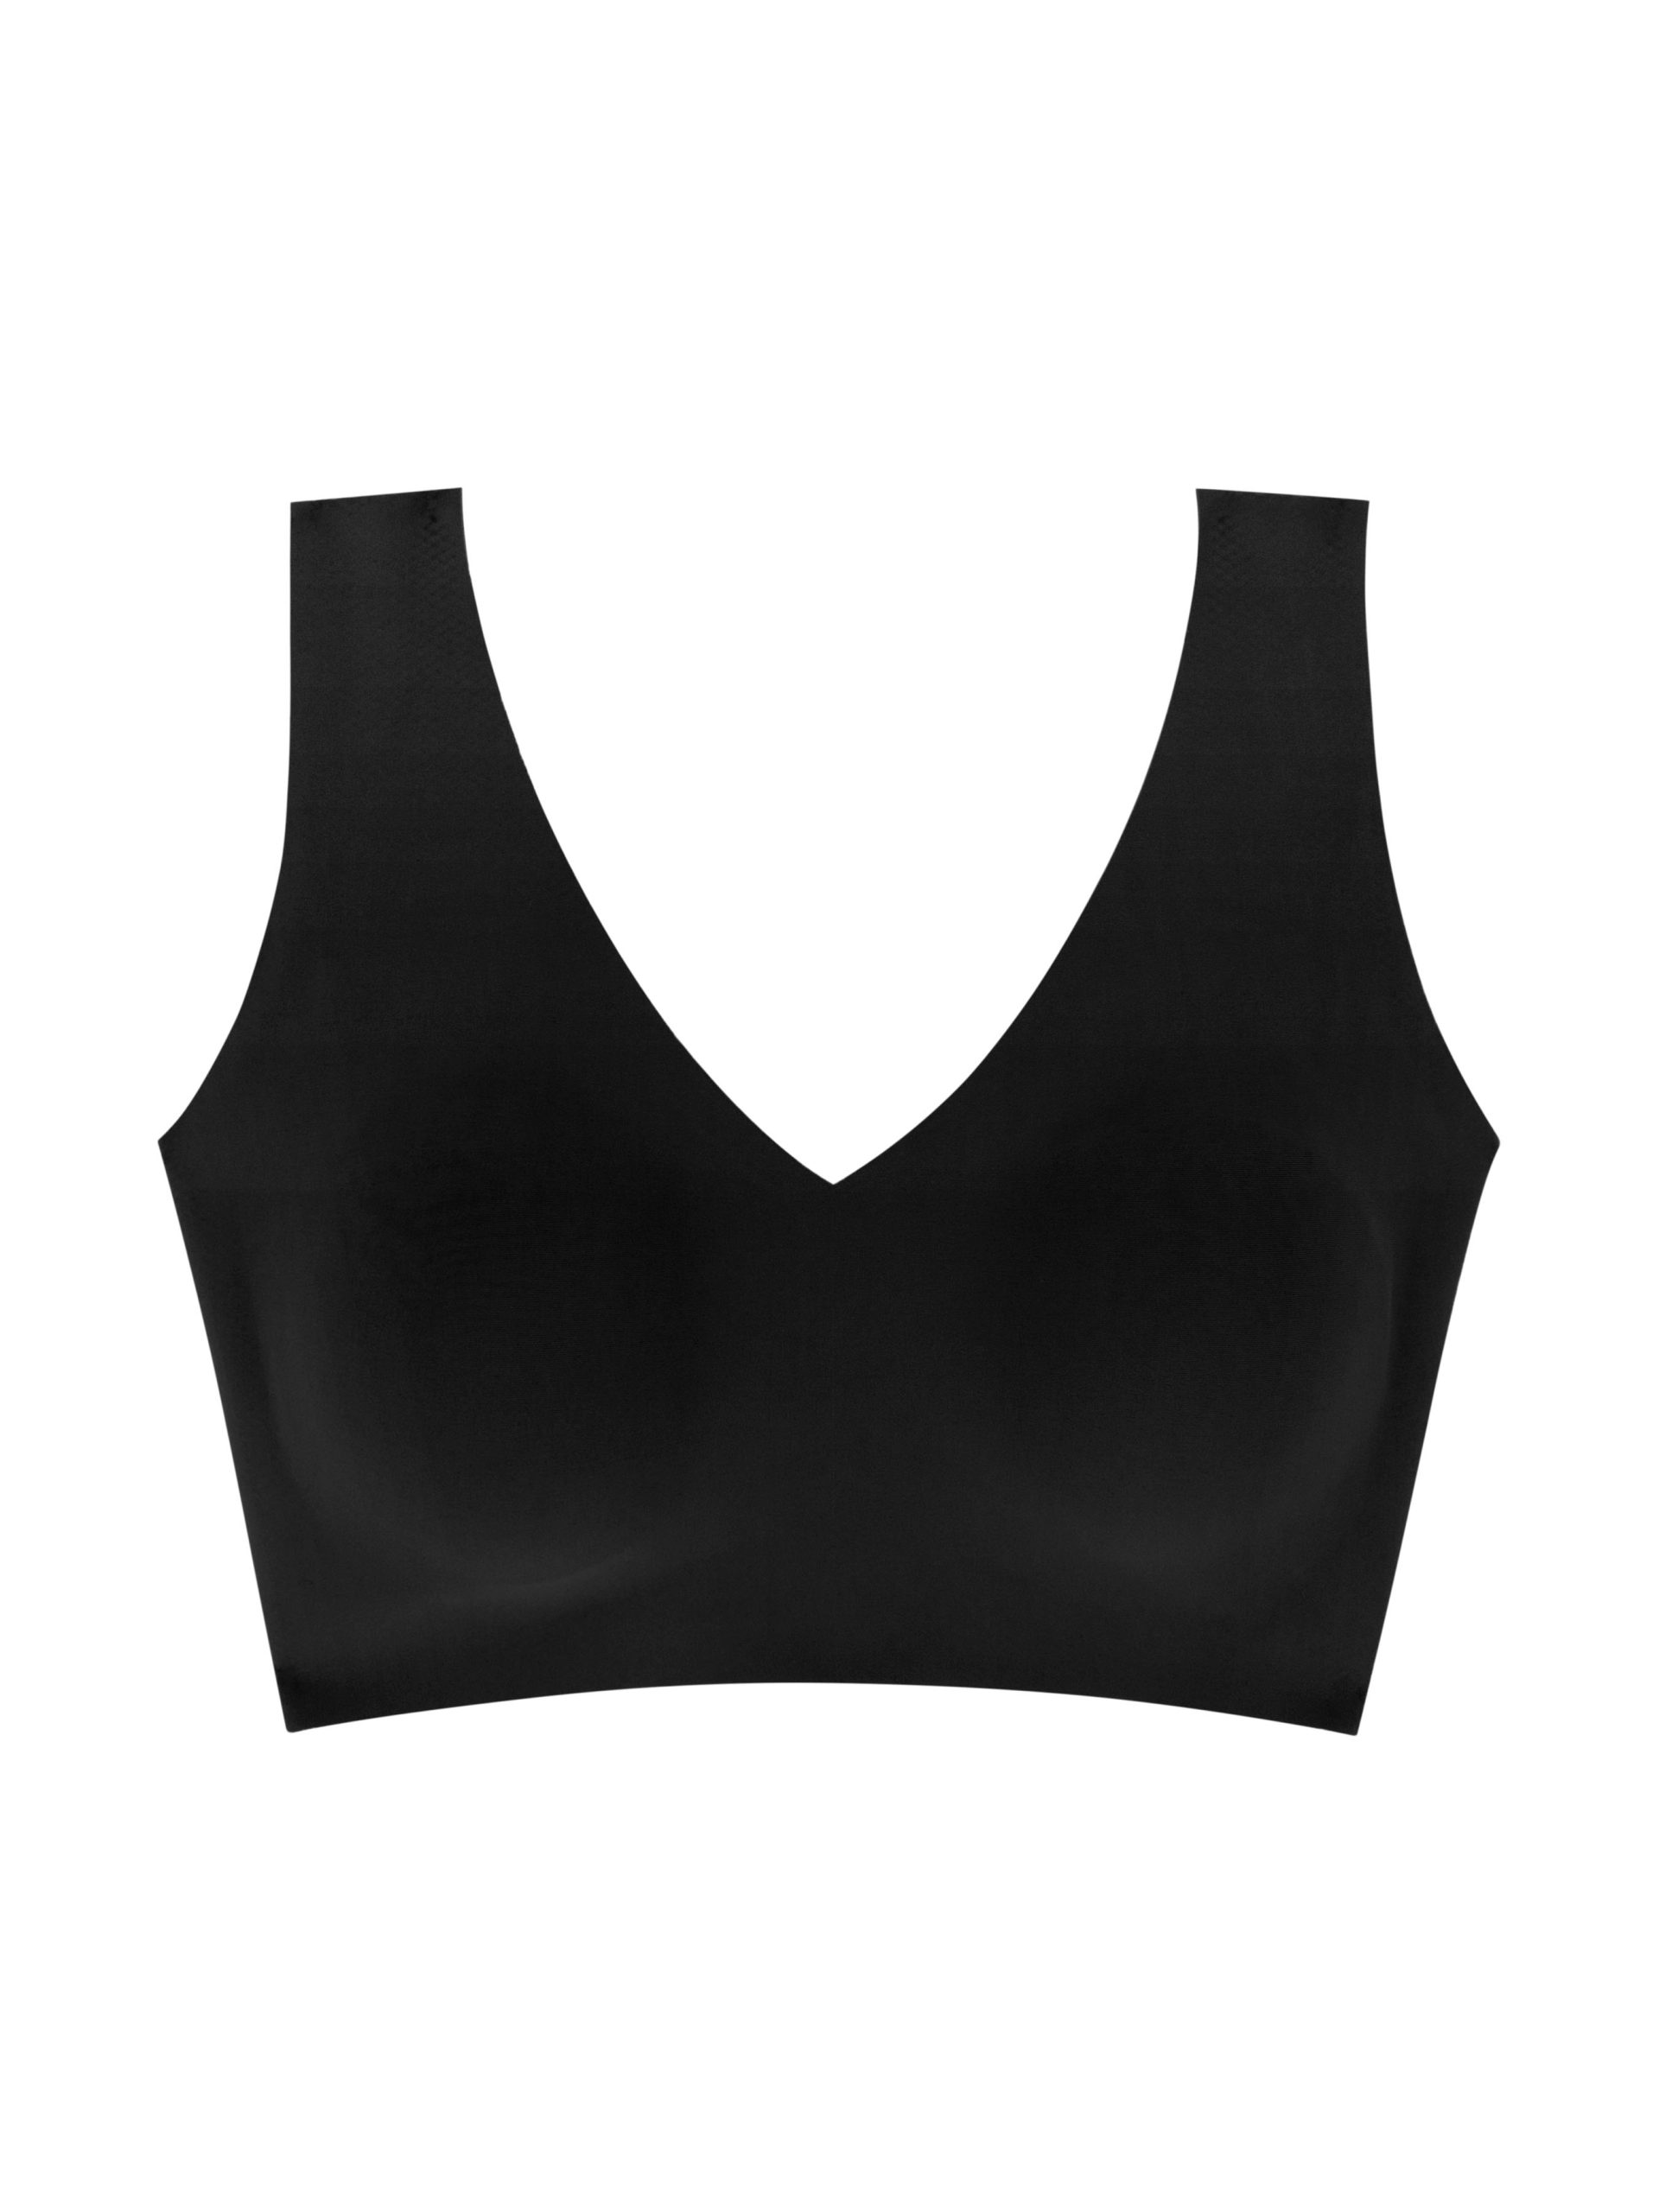 Domyos Women Fitness Bra, Underwear (Black) - 85 B 